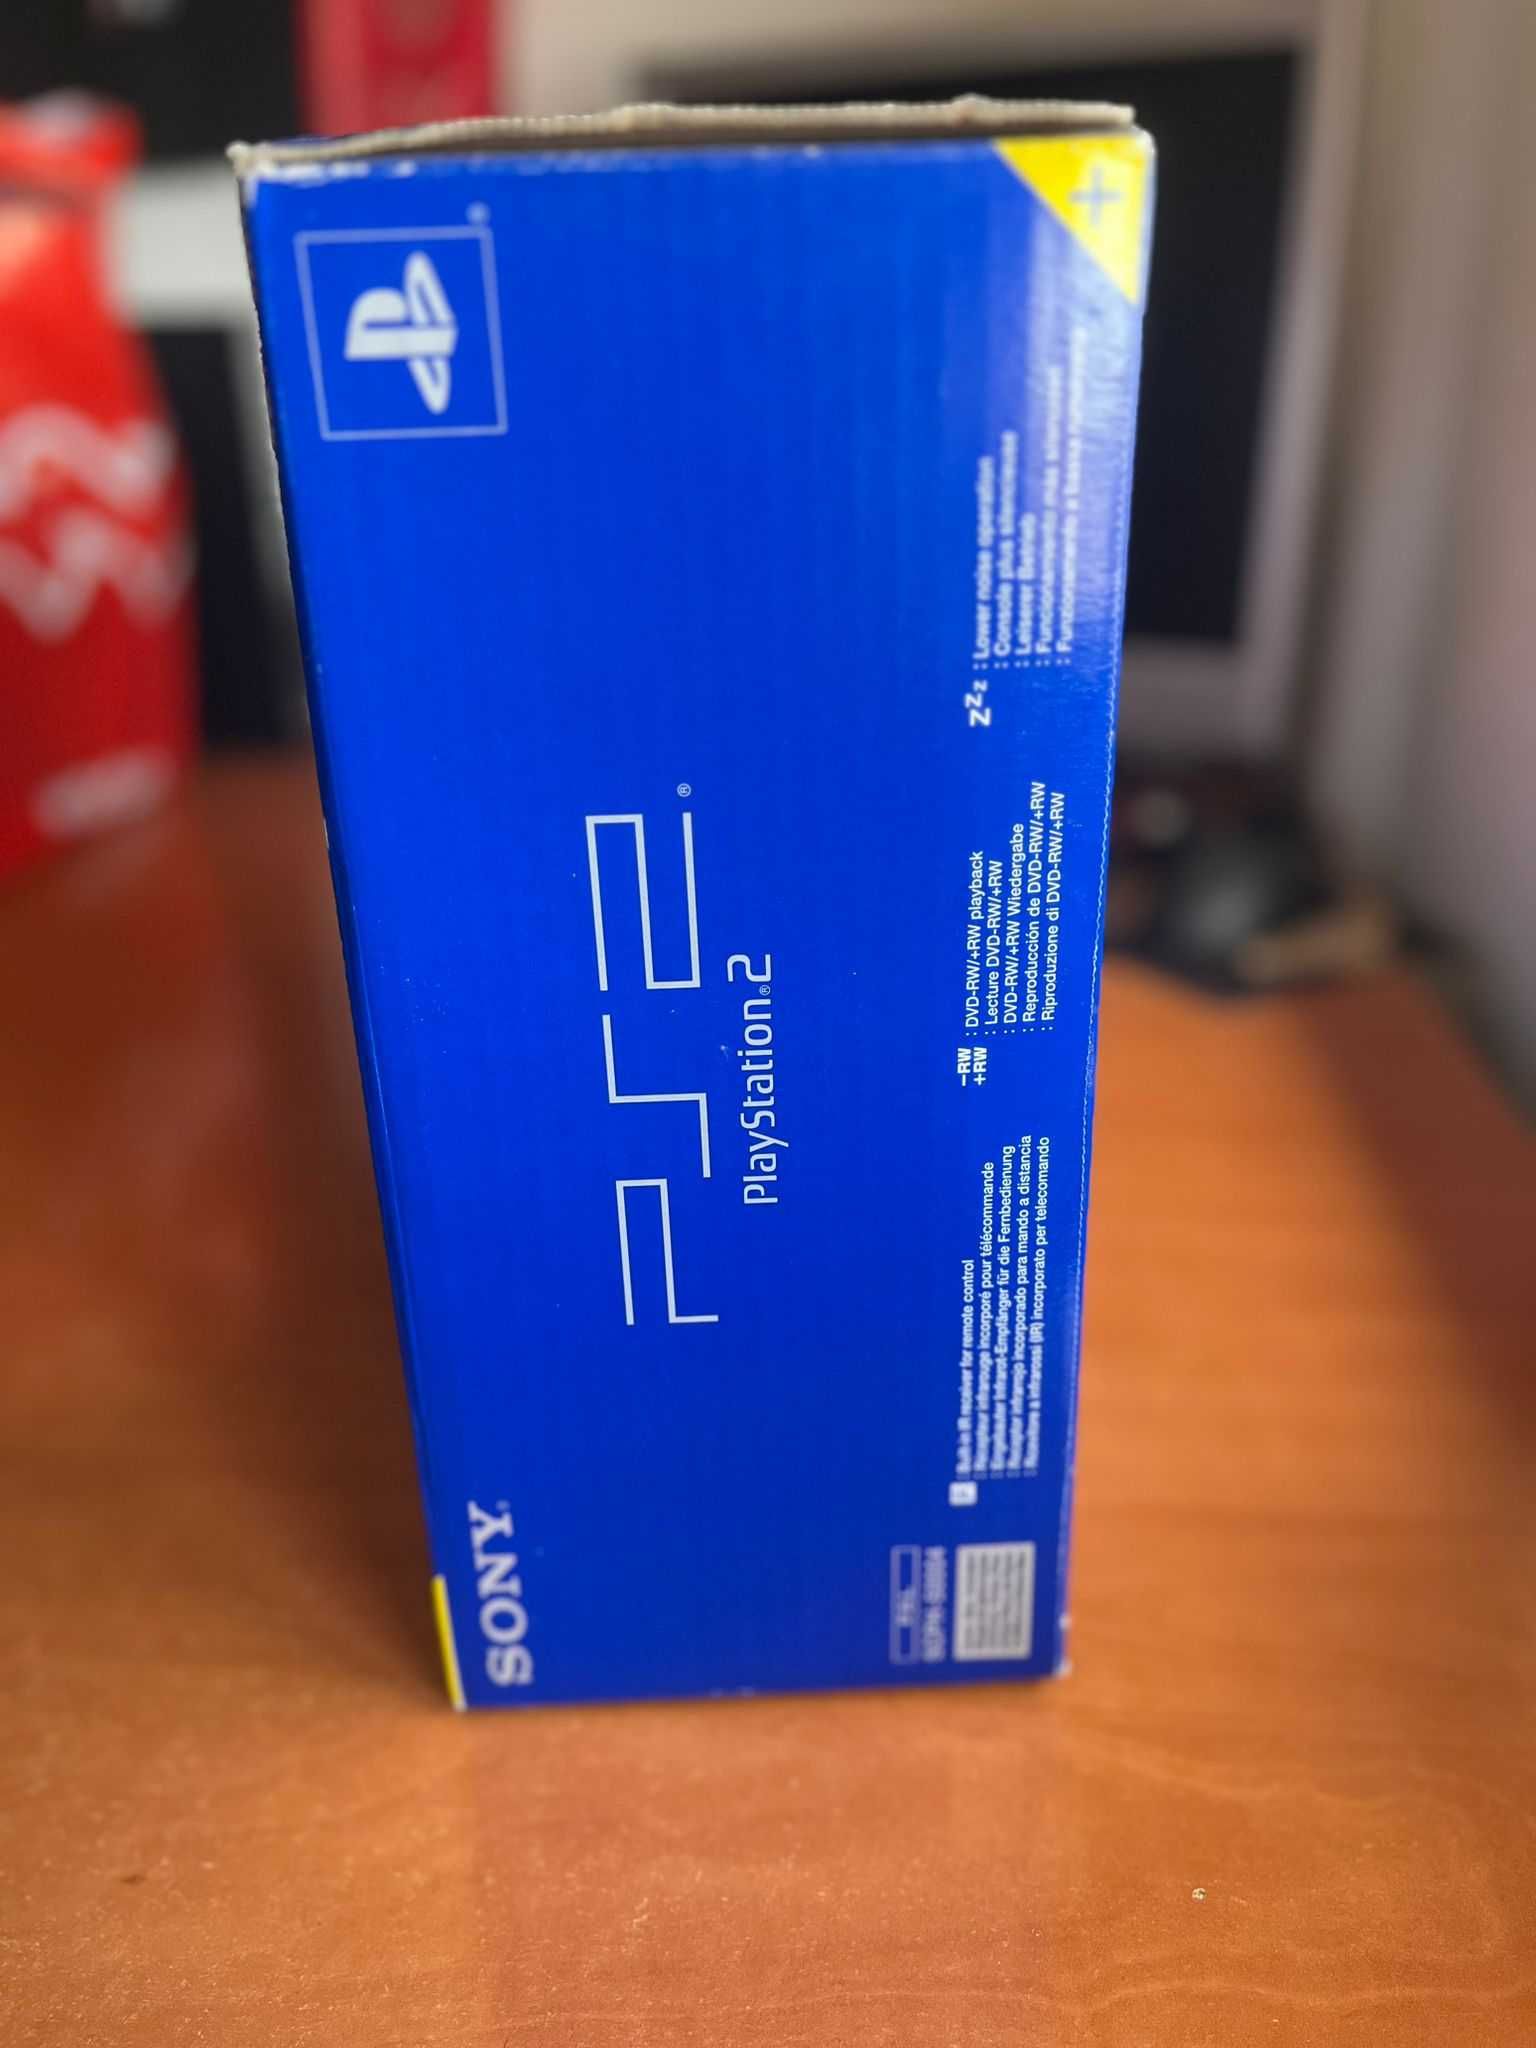 Caixa Sony Playstation 2 - Azul (somente caixa) SCPH-50004